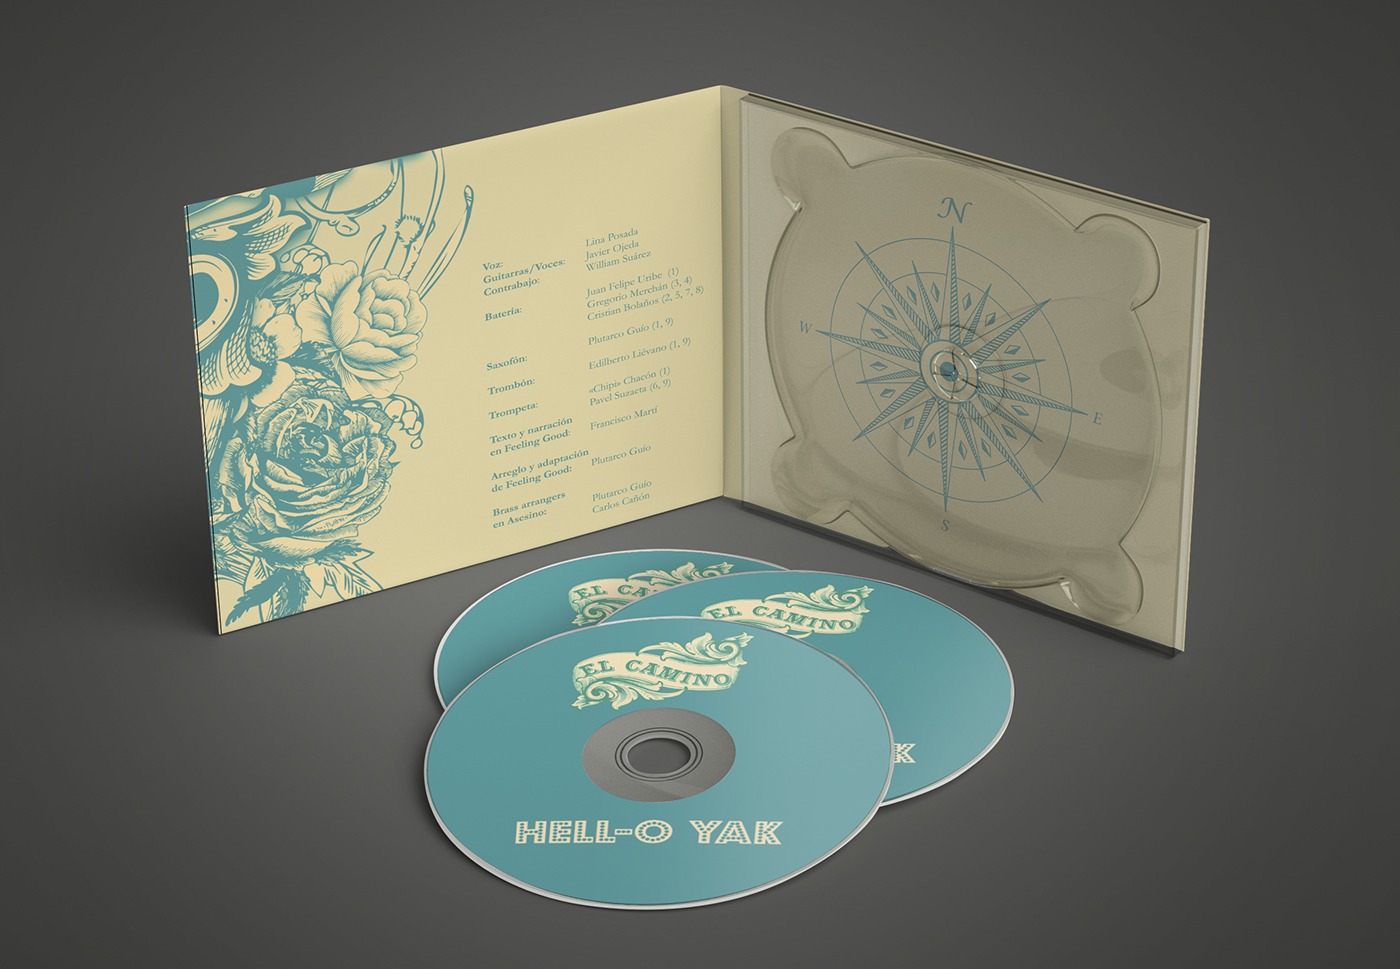 Hell-o Yak lina posada Type Sailor Debut Album type design engraved el camino